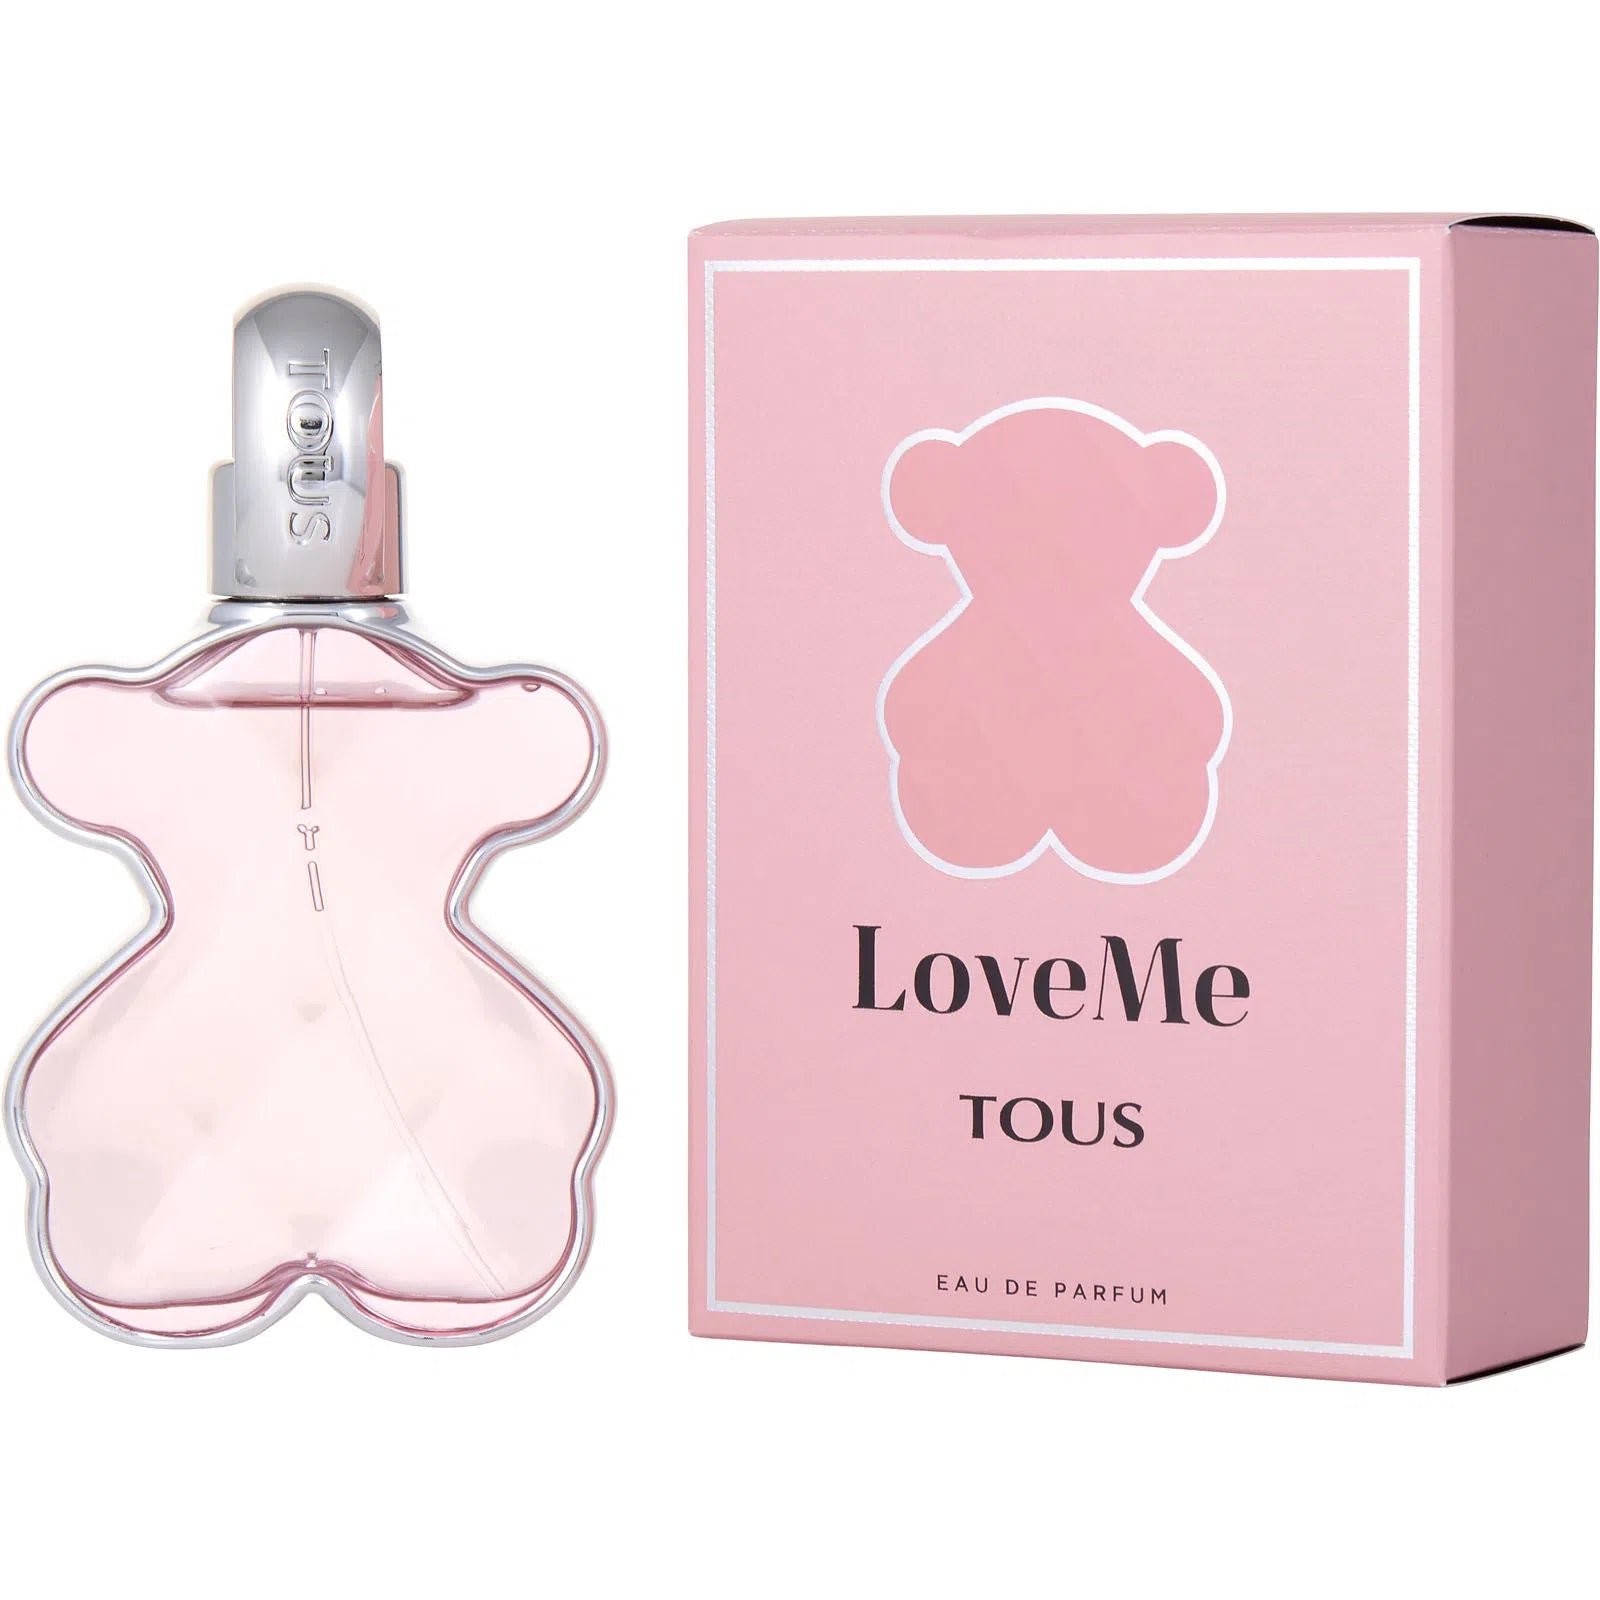 Perfume Tous LoveMe EDP (W) / 90 ml - 8436550507584- Prive Perfumes Honduras